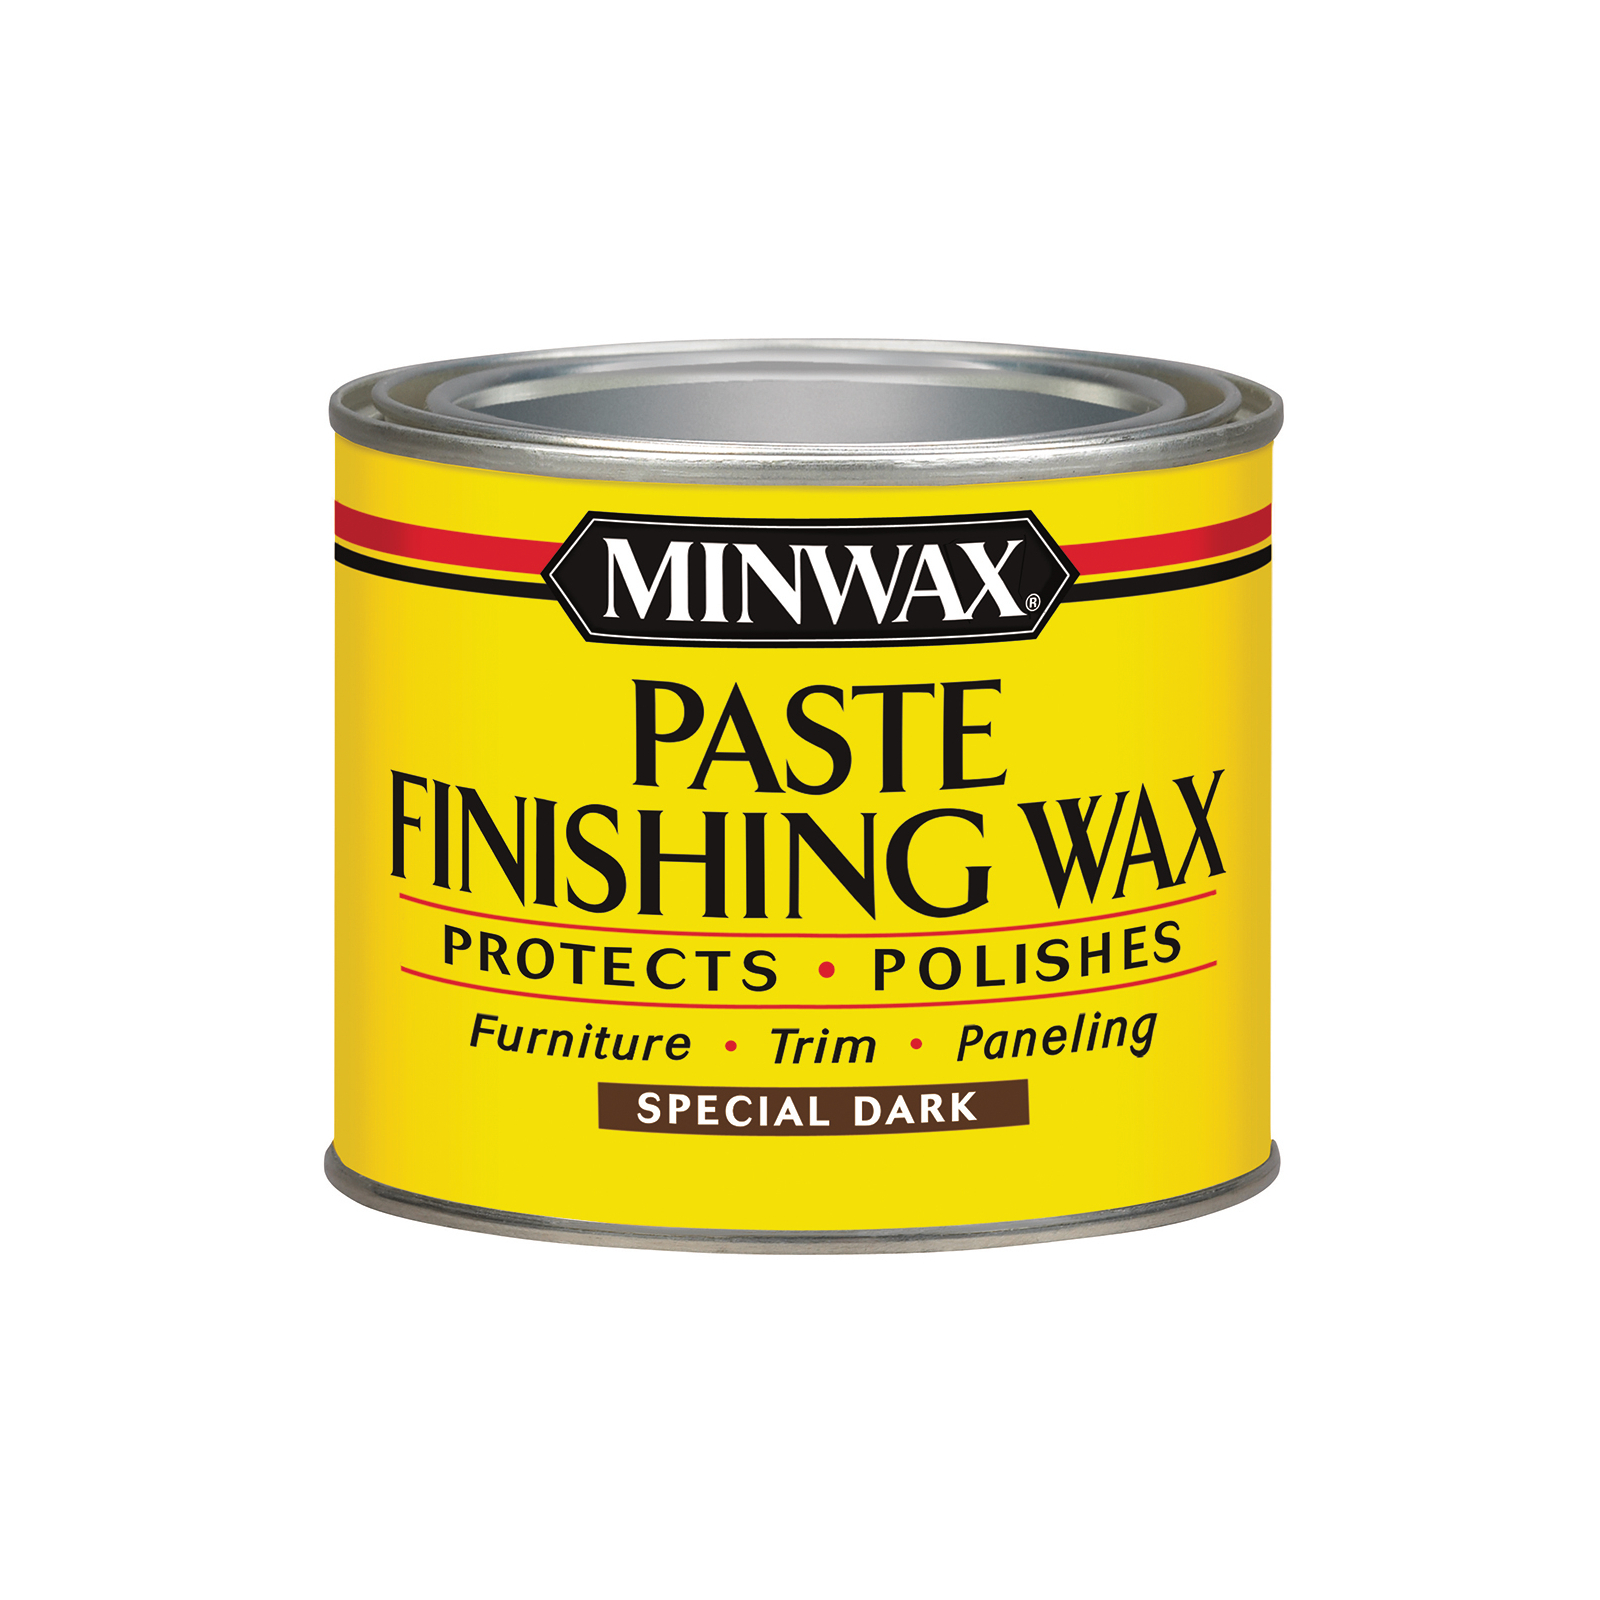 Minwax Paste Finishing Wax, Special Dark, 1 lb - image 1 of 4